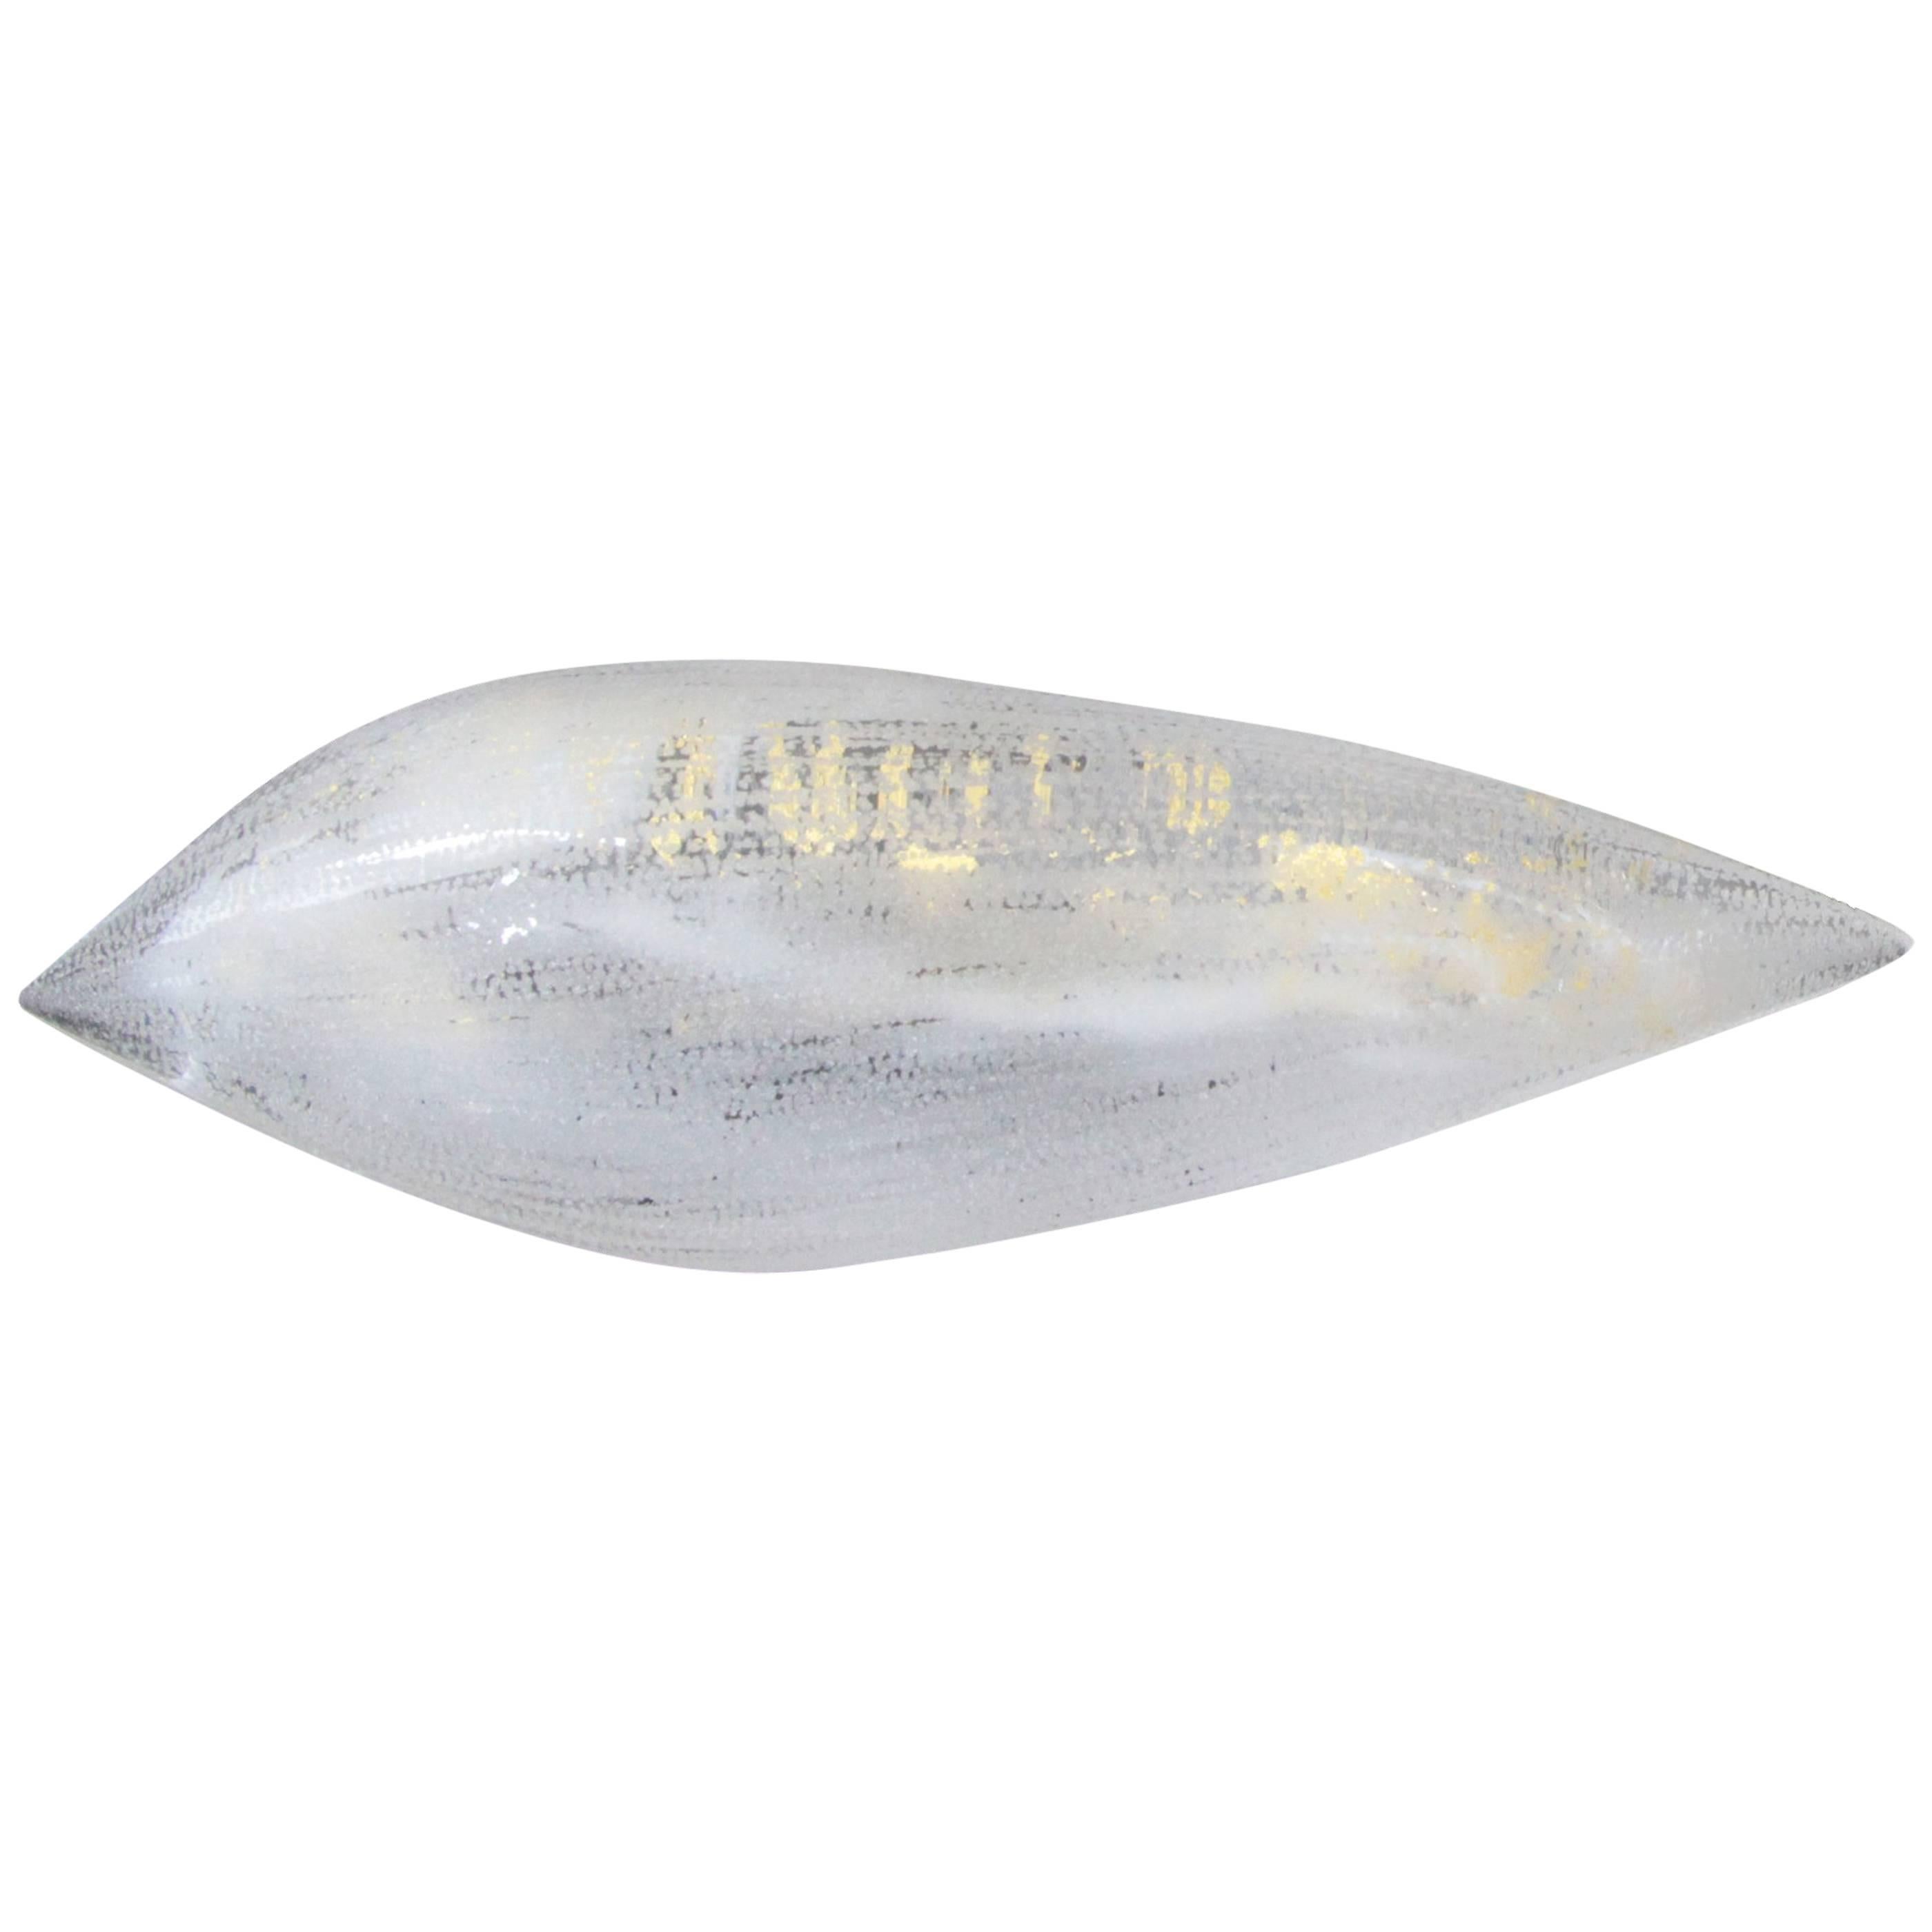 Arioi Glass Art Object DLeuci Studio Contemporary Silver Gold Foil Sculpture For Sale